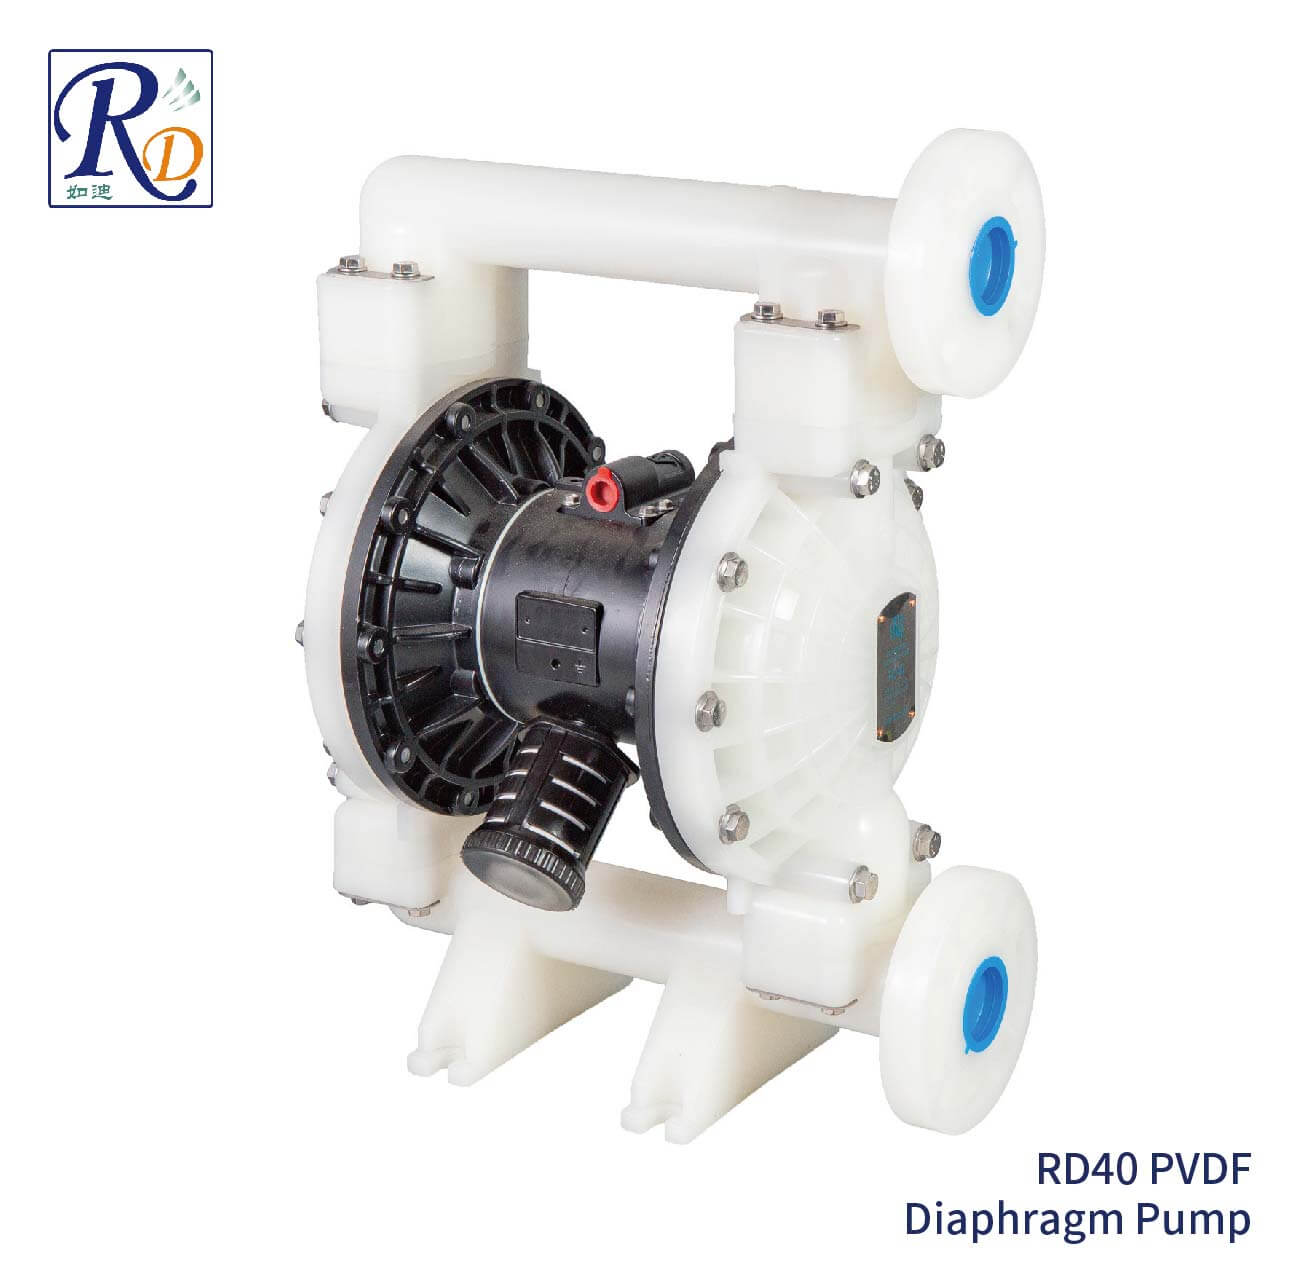 RD40 PVDF Diaphragm Pump